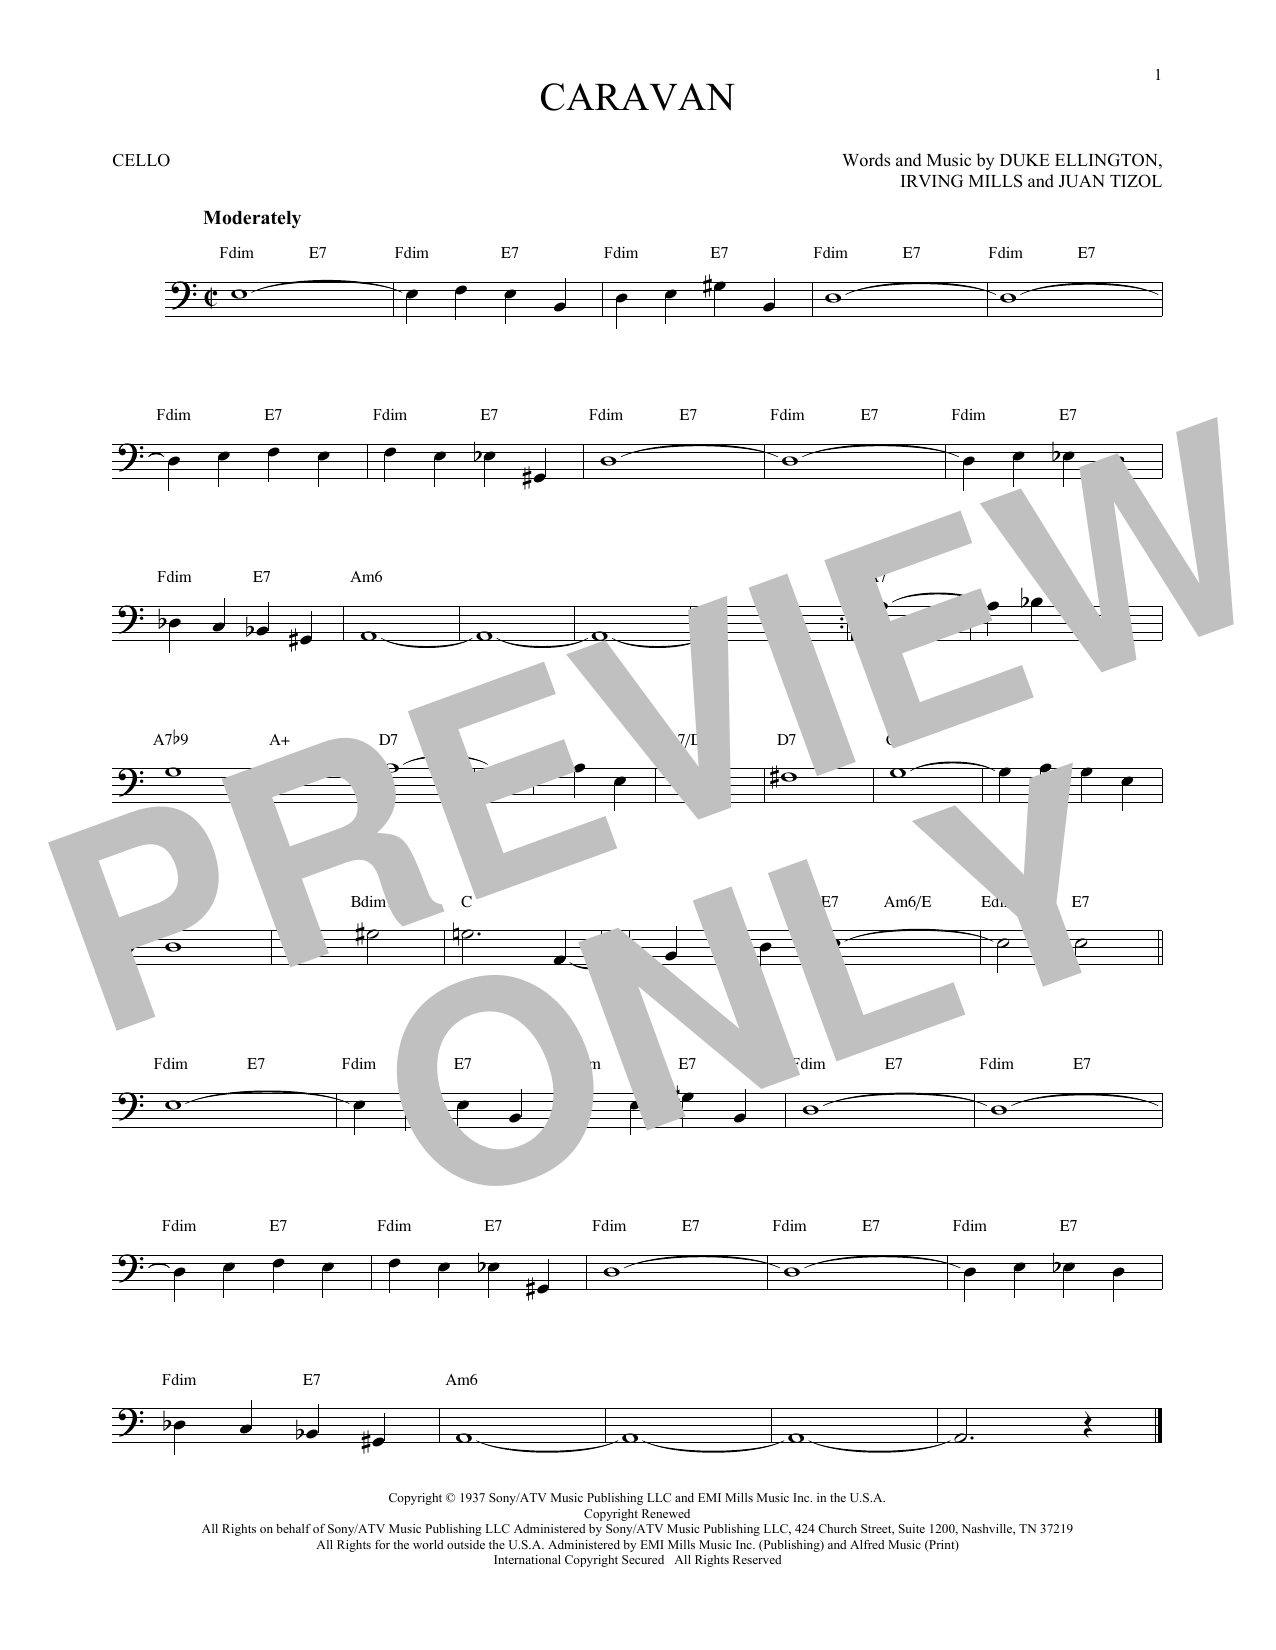 Download Juan Tizol & Duke Ellington Caravan Sheet Music and learn how to play Flute PDF digital score in minutes